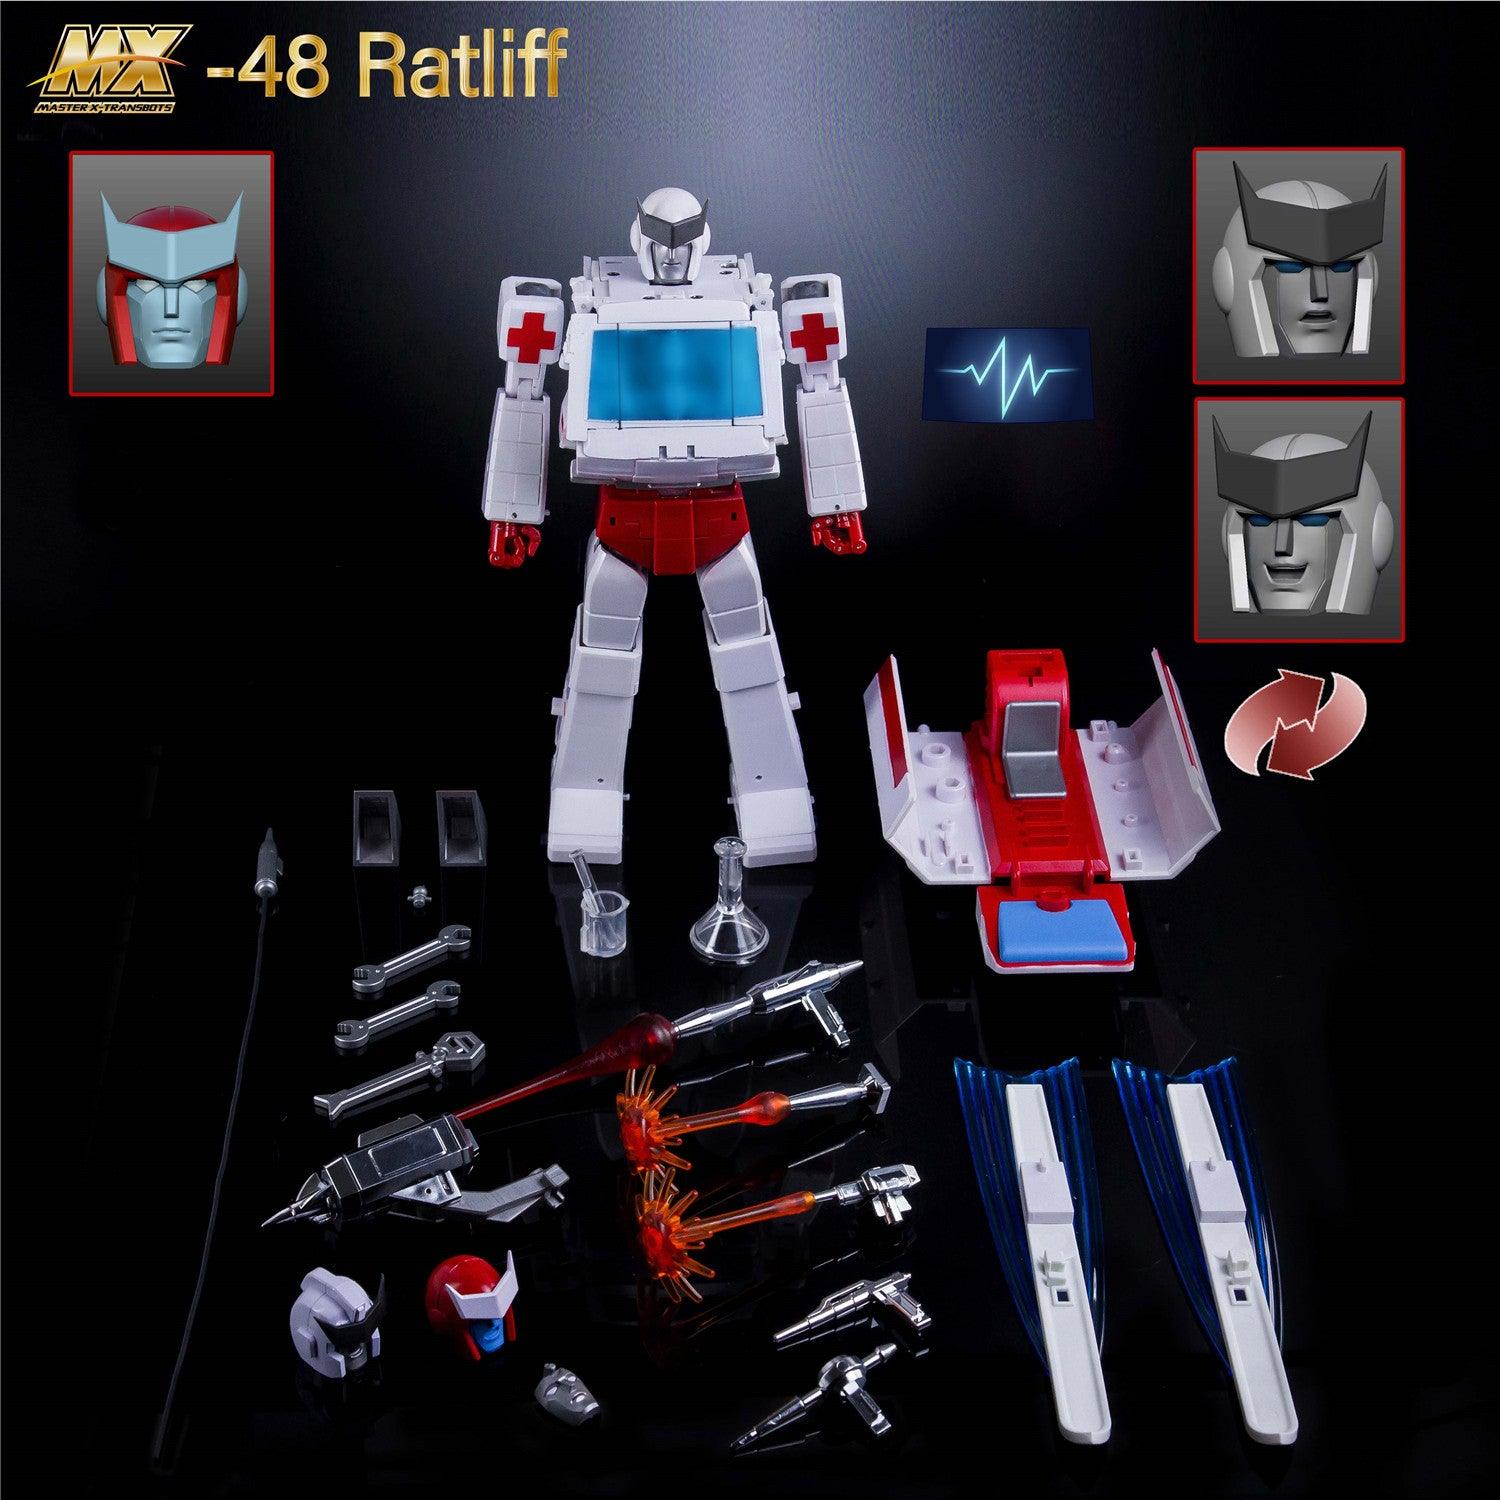 X-Transbots - MX-48 (MX-XLVIII) Ratliff